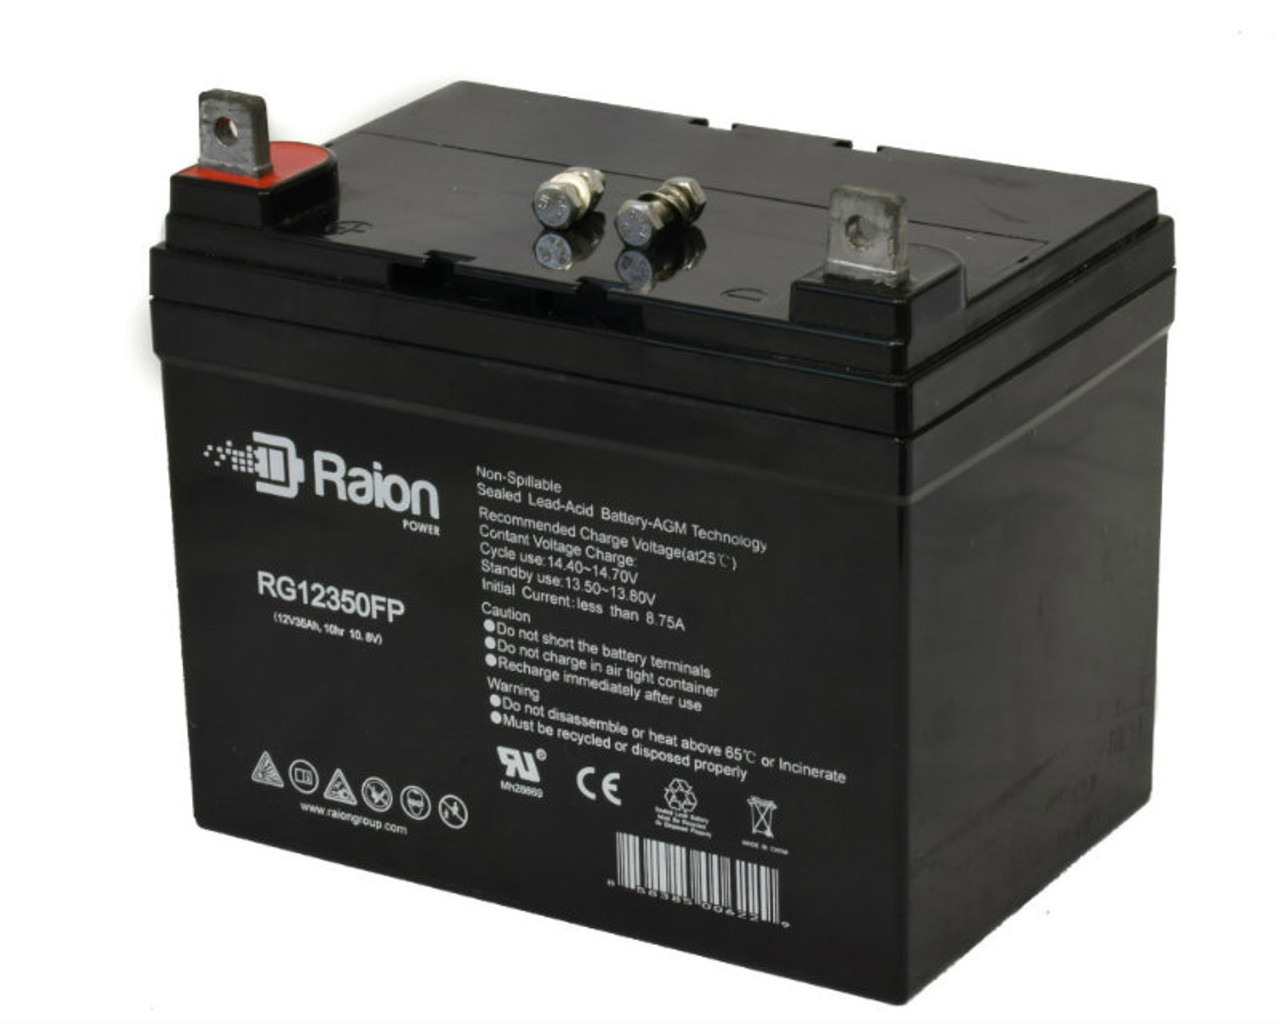 Raion Power Replacement 12V 35Ah Battery for Scag Power Equipment STZ52-20KH - 1 Pack